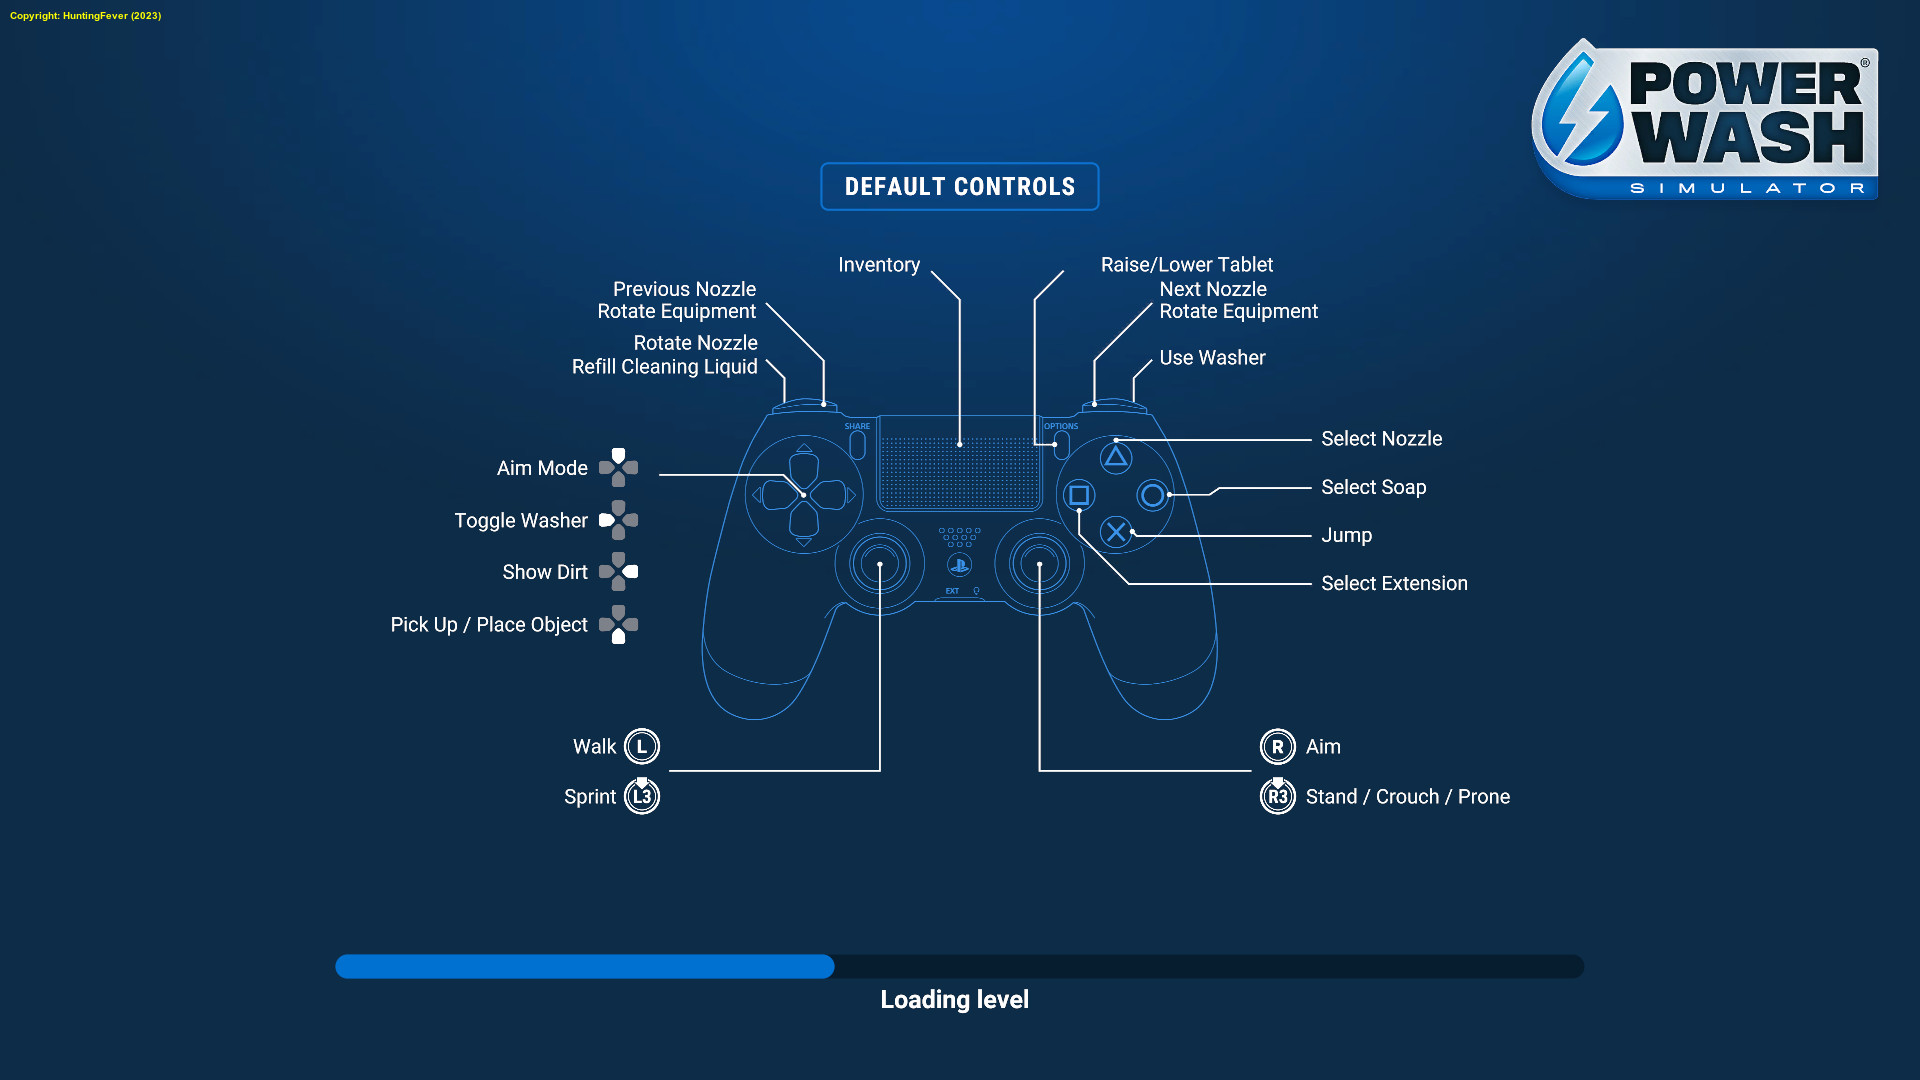 PowerWash Simulator DLC Roadmap Revealed